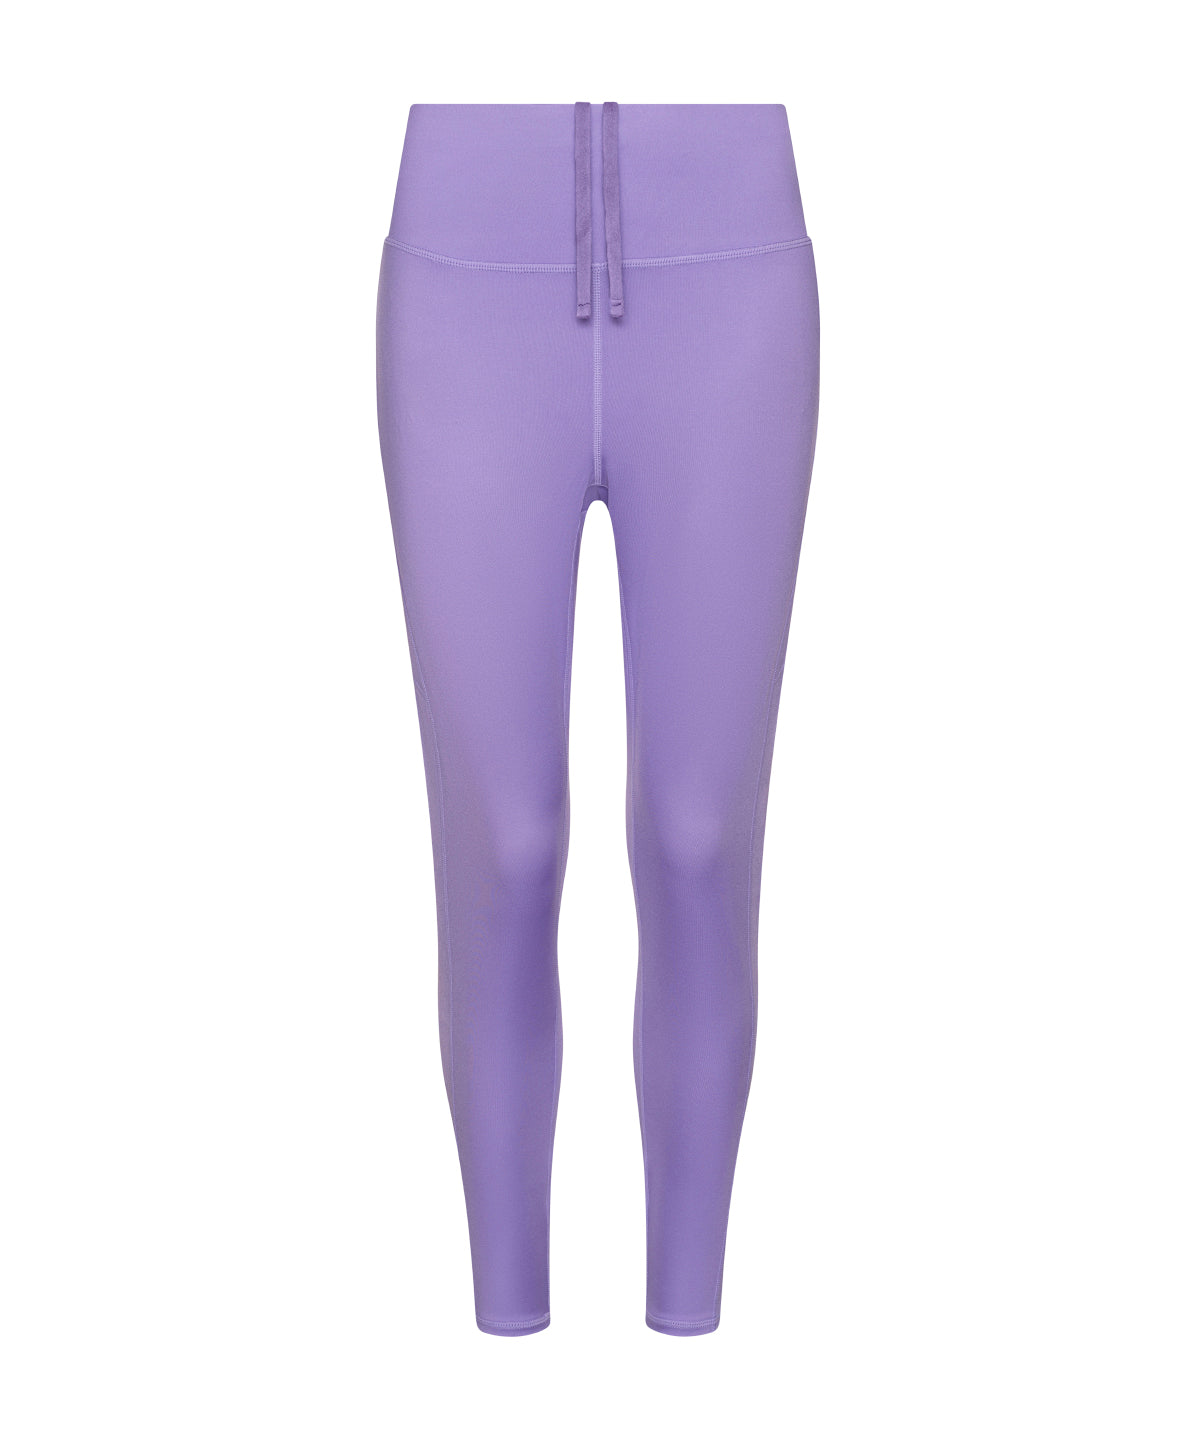 Personalised Leggings - Light Purple AWDis Just Cool Women’s recycled tech leggings